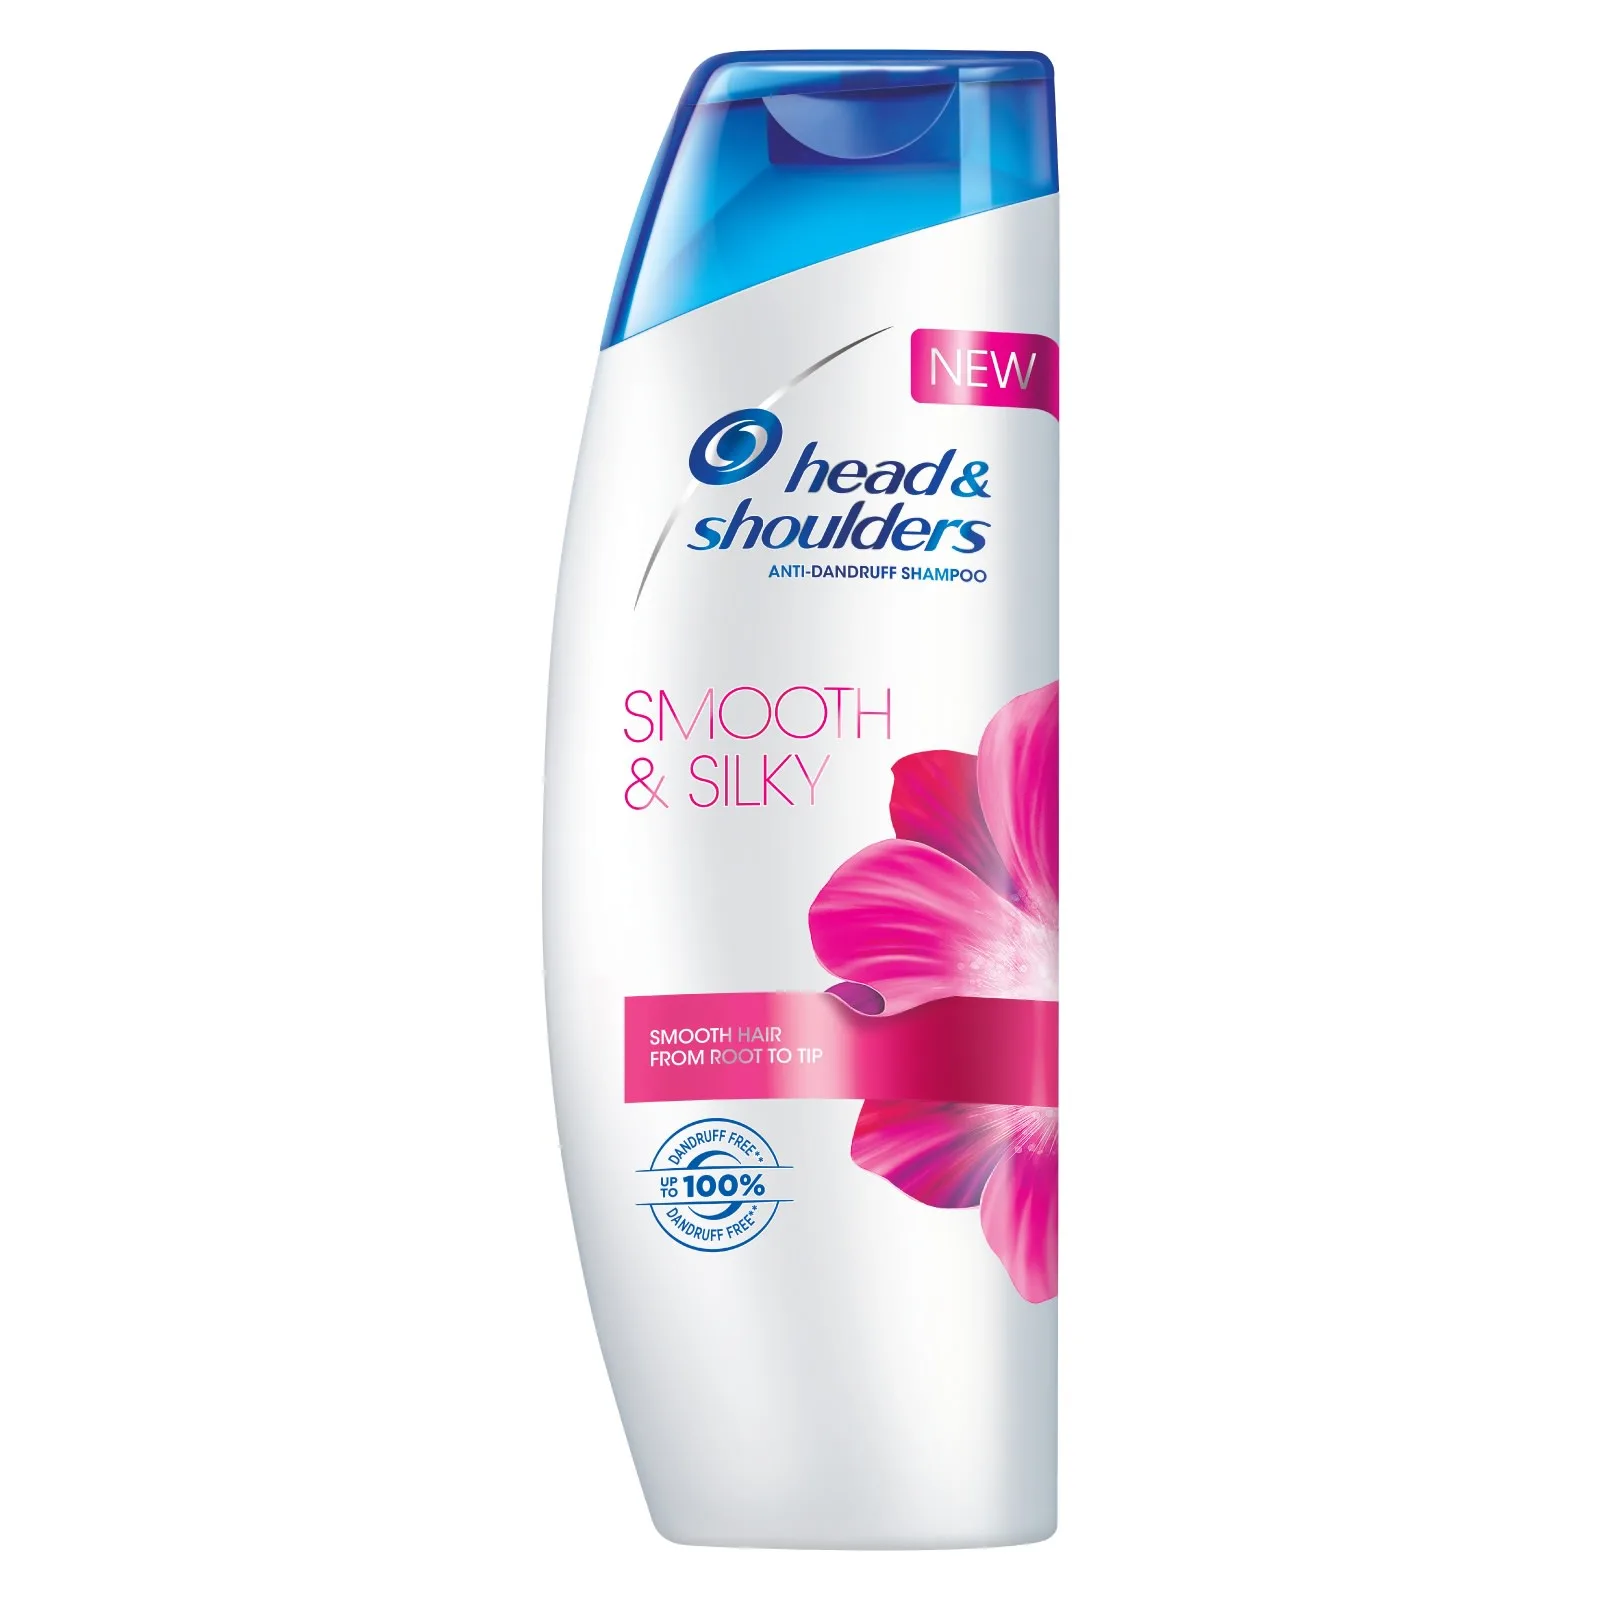 3. Smooth and silky anti-dandruff shampoo: